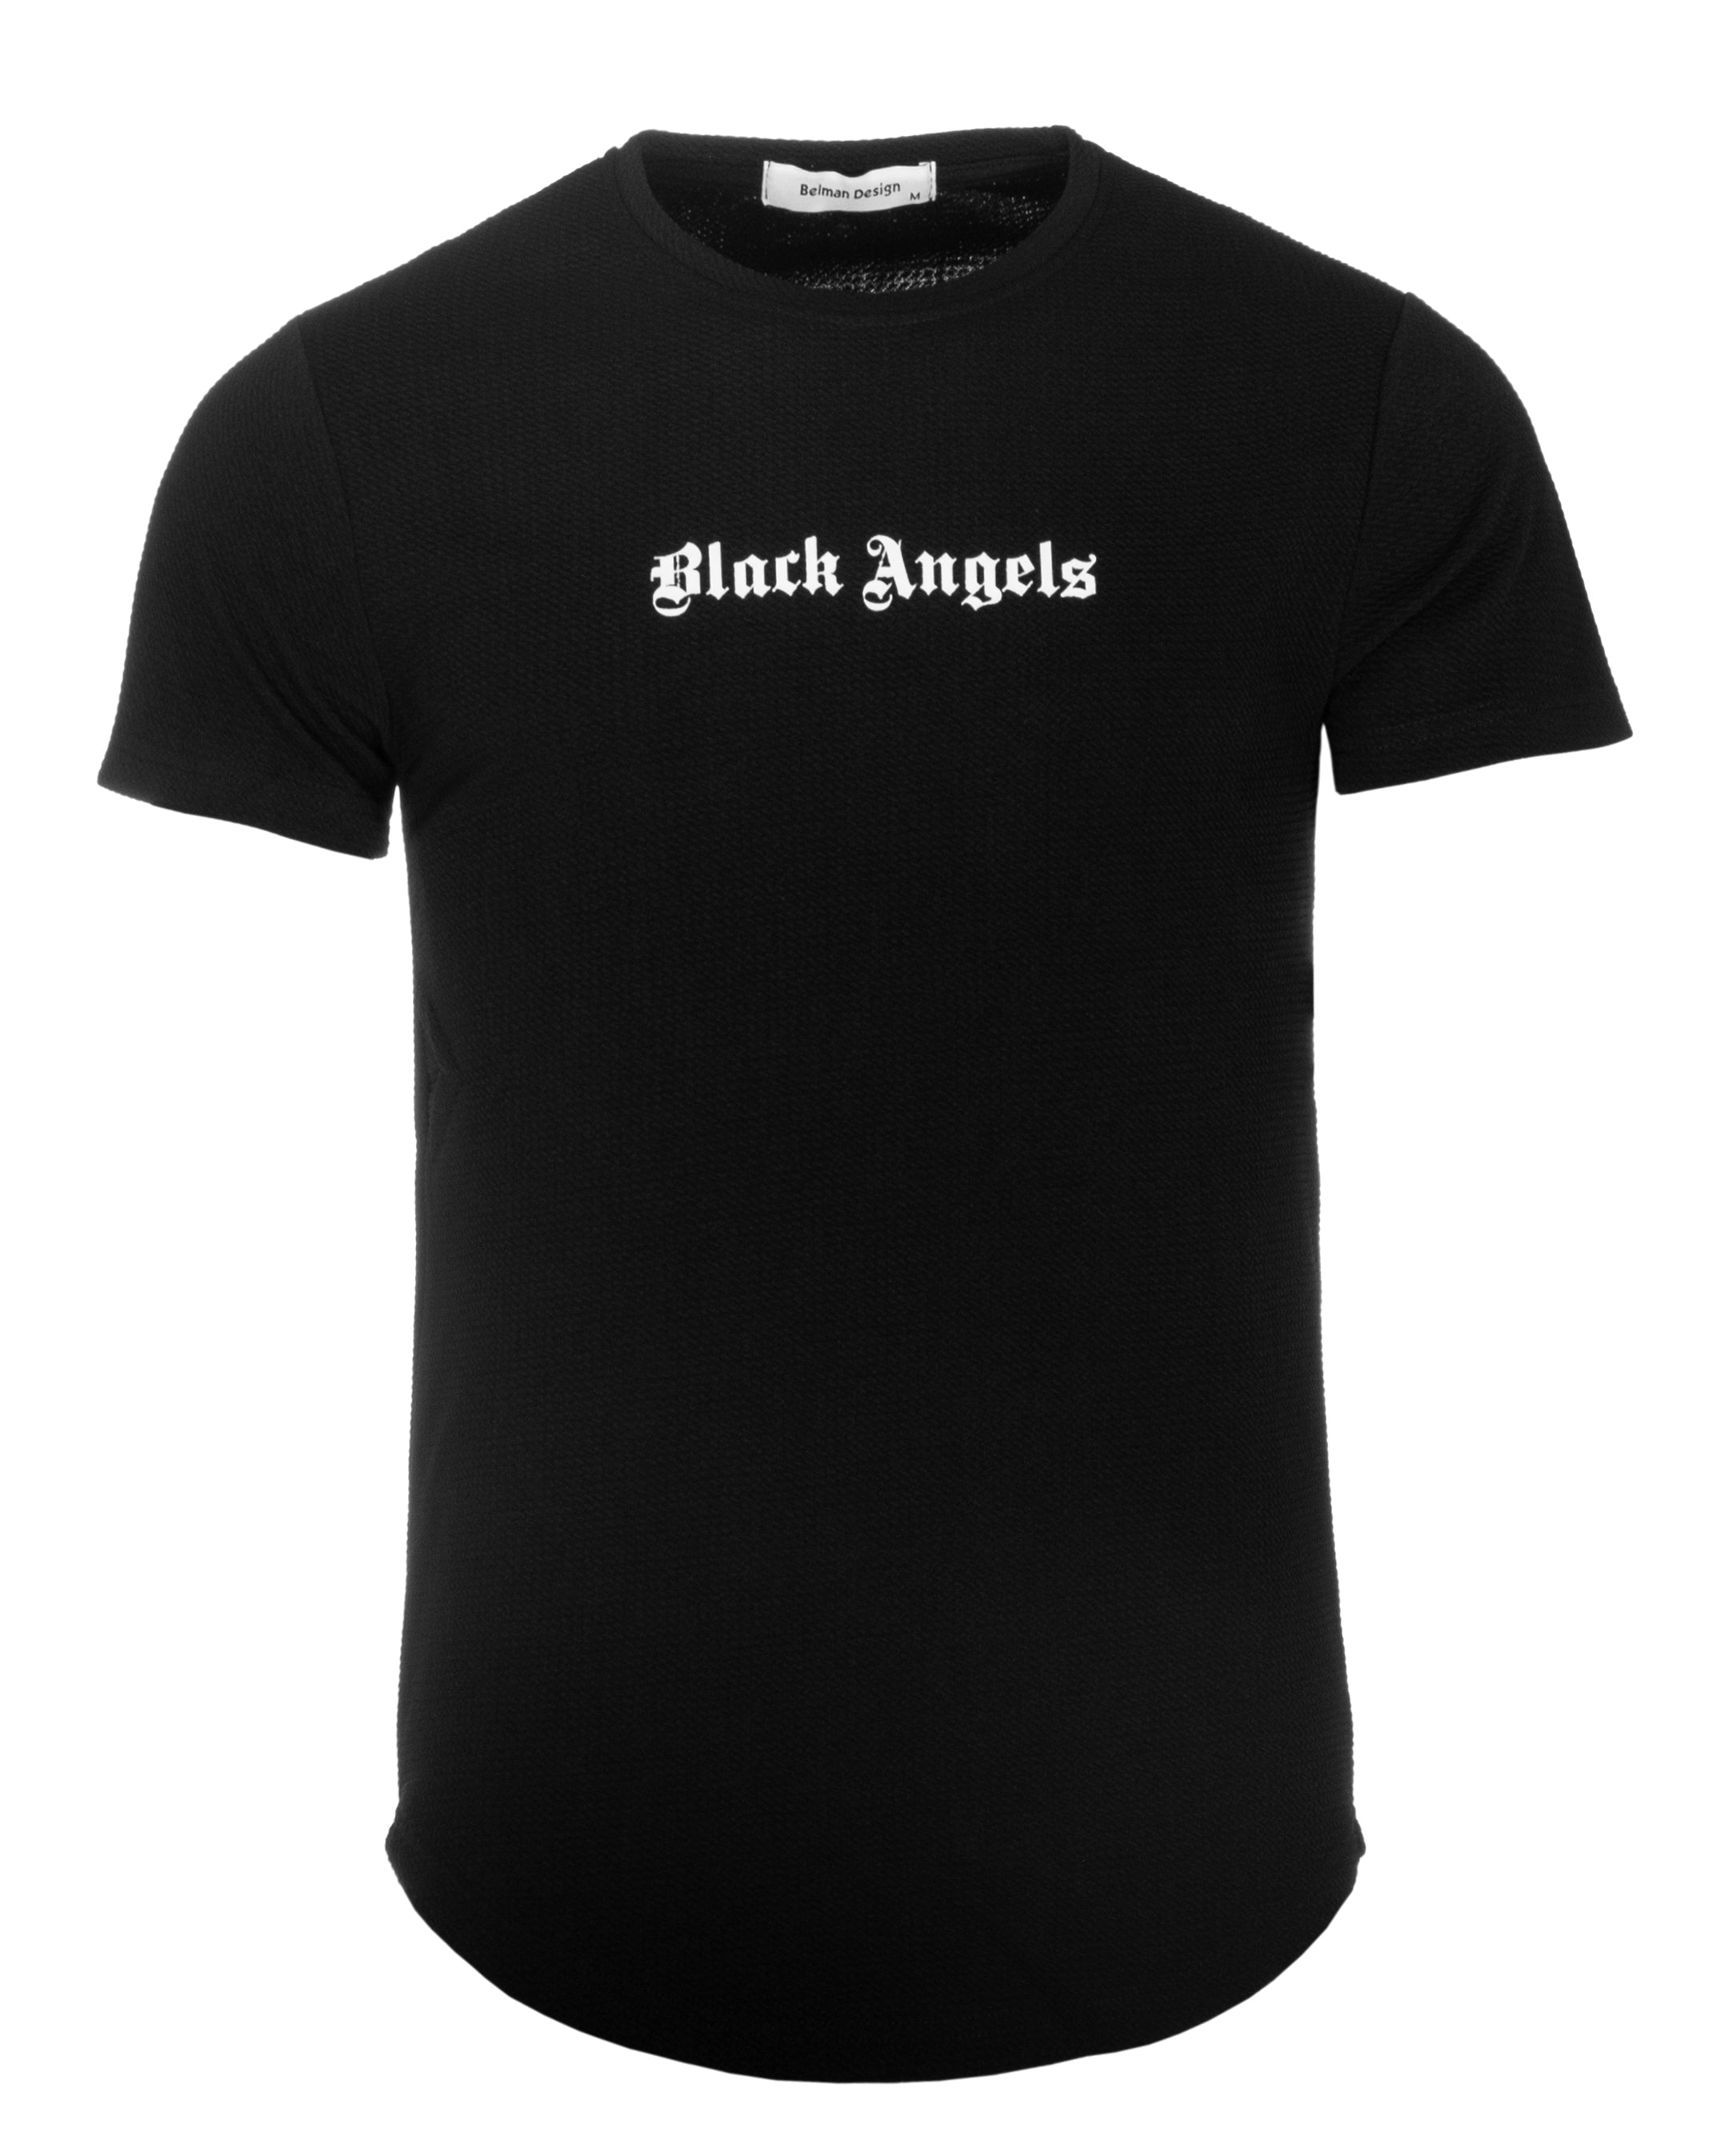 Black Angels t-shirt - Black